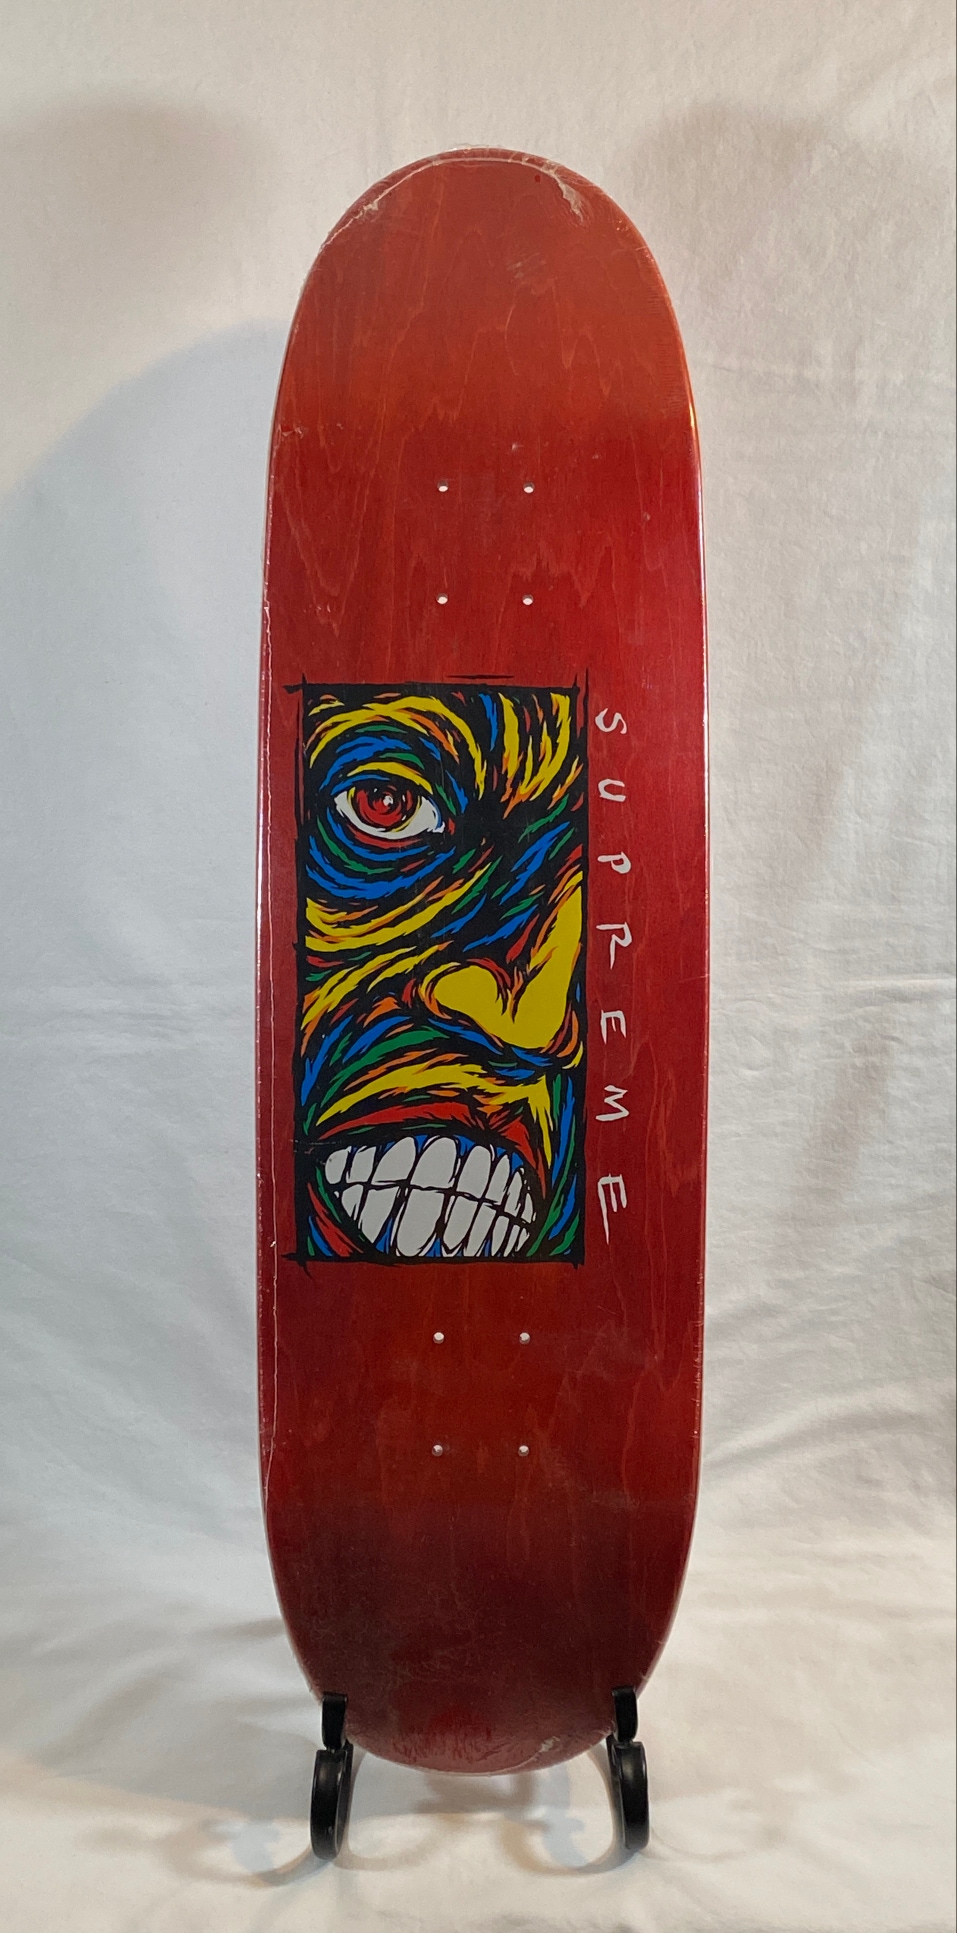 Supreme FW19 "Disturbed" Pop Art Box Logo Red/Multicolor Skateboard Deck New